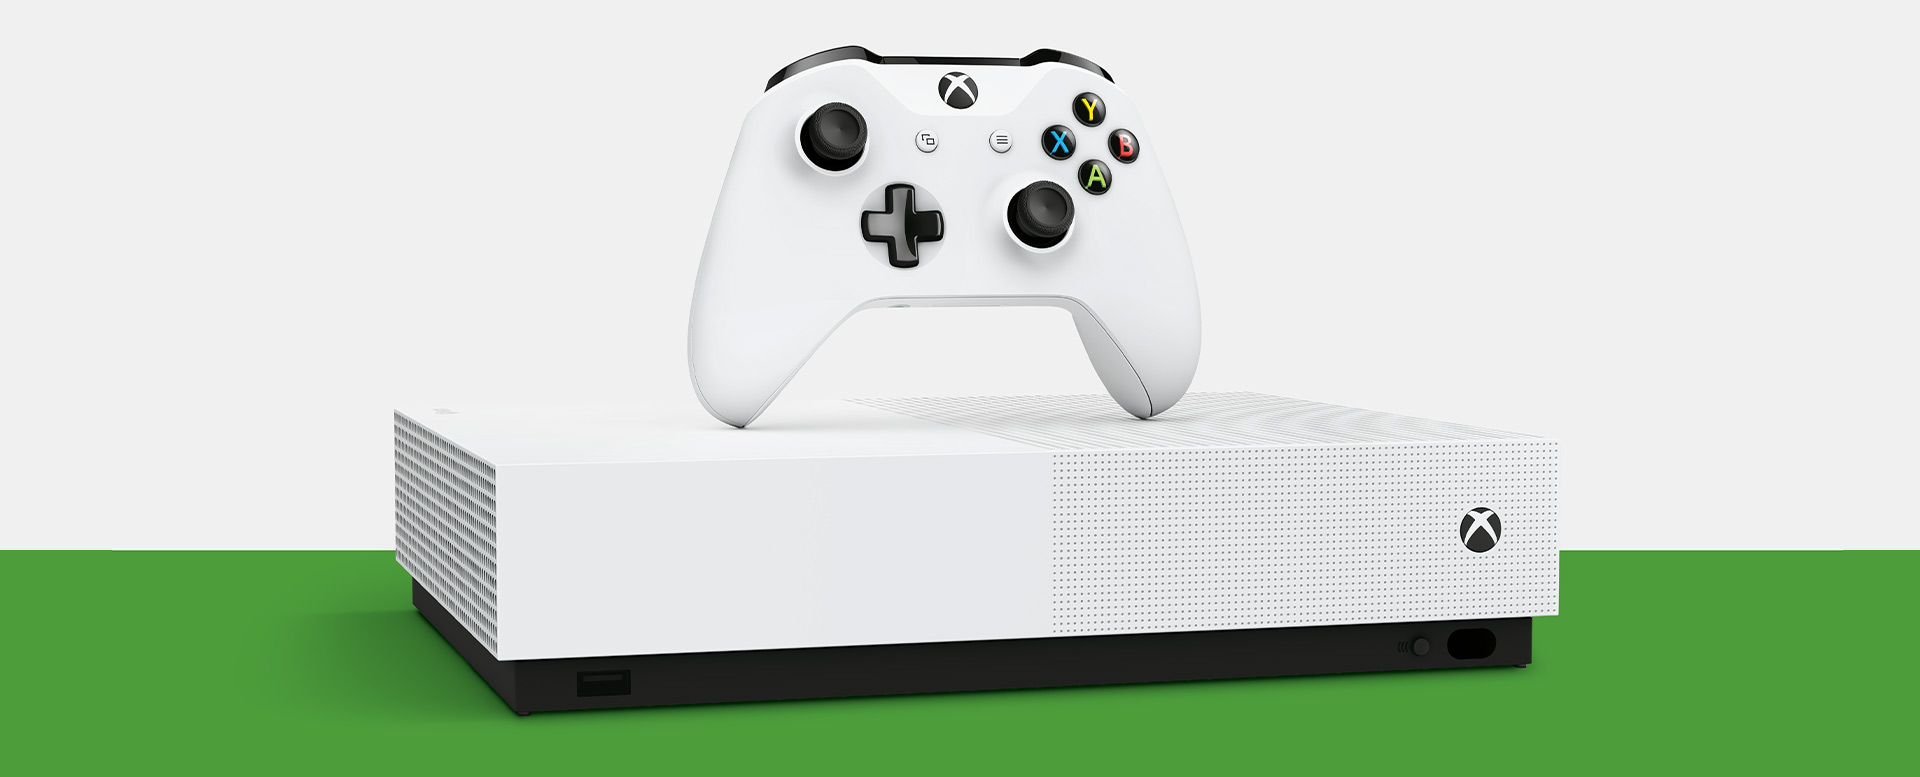 Xbox One を買うべきか迷っている人へ購入前に知って欲しいことまとめ Wpteq